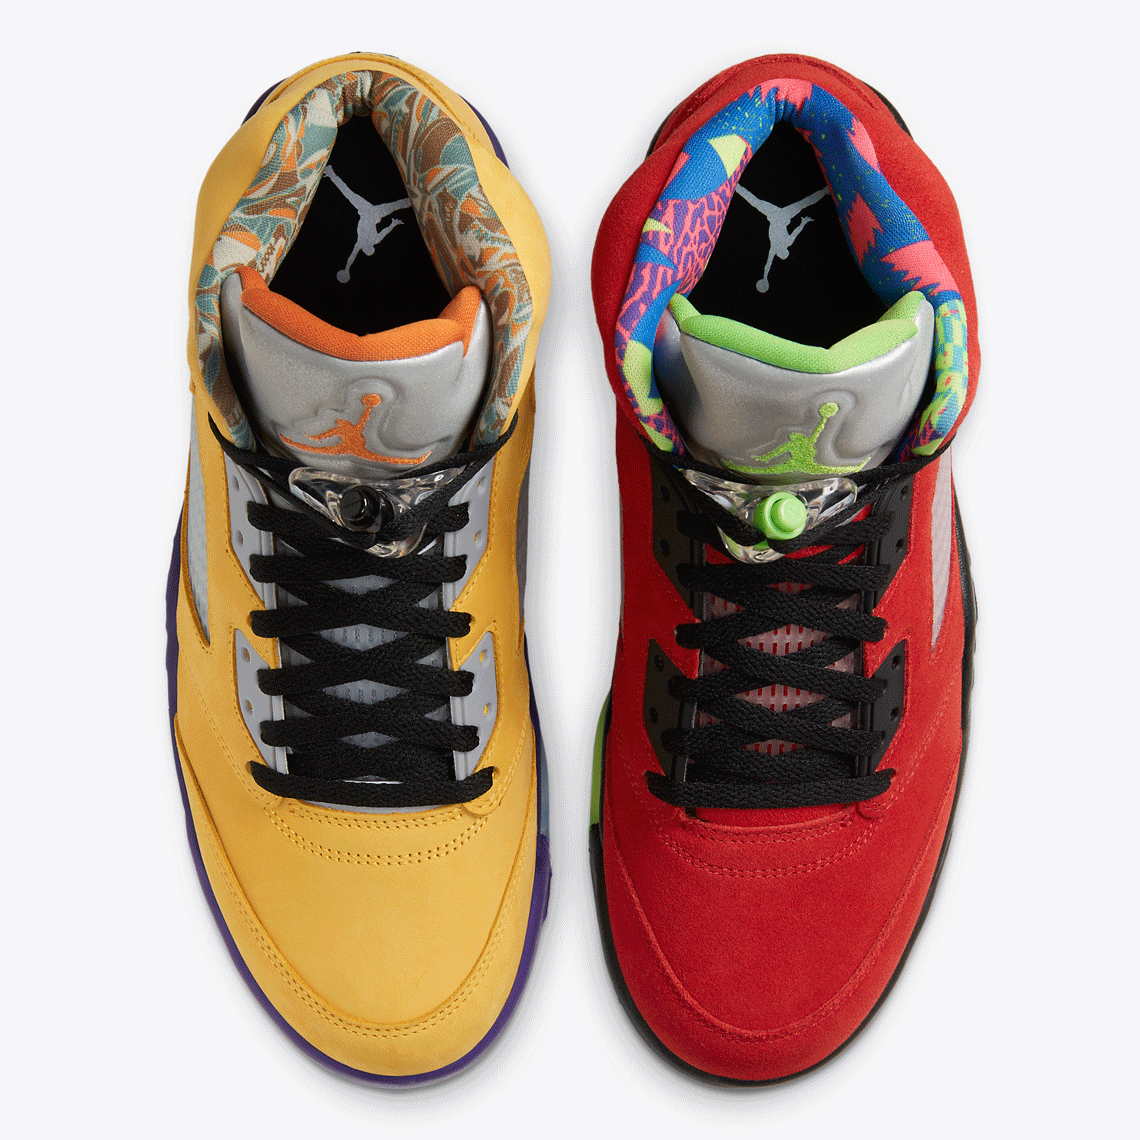 Air Jordan 5 What The CZ5725-700 - Release Info | SneakerNews.com